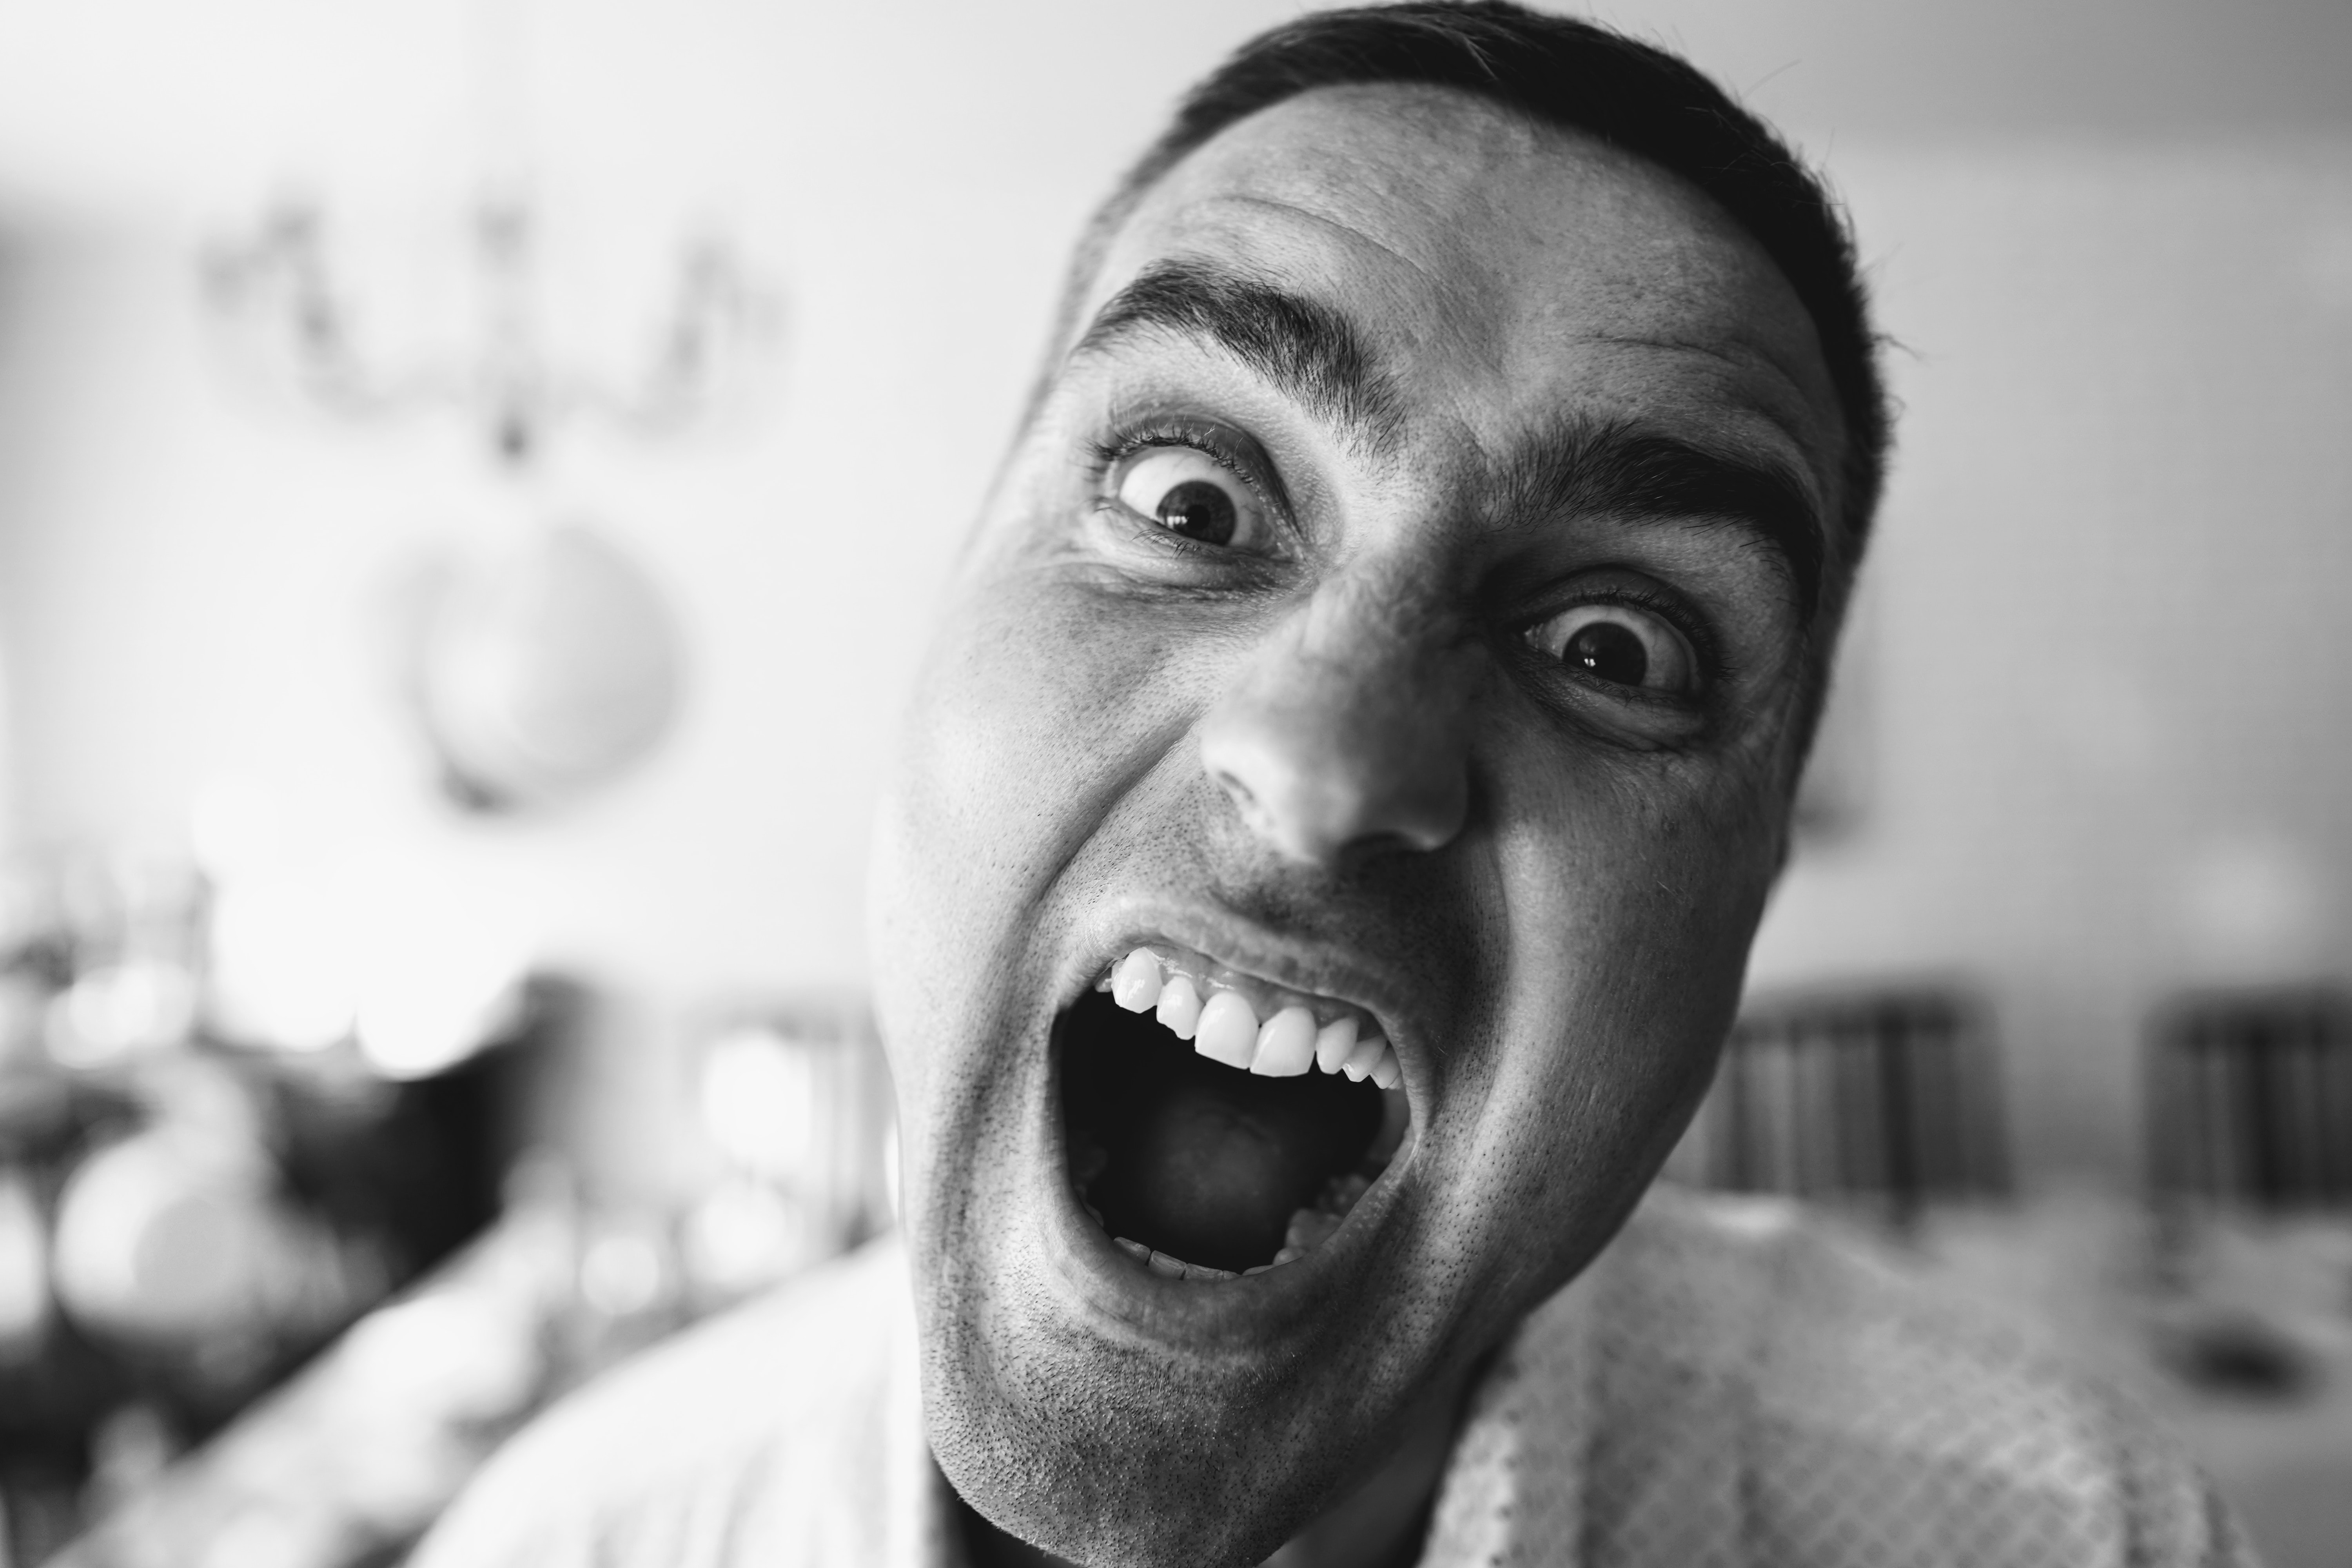 Black and white photo of shouting man; image by Dmitry Vechorko, via Unsplash.com.